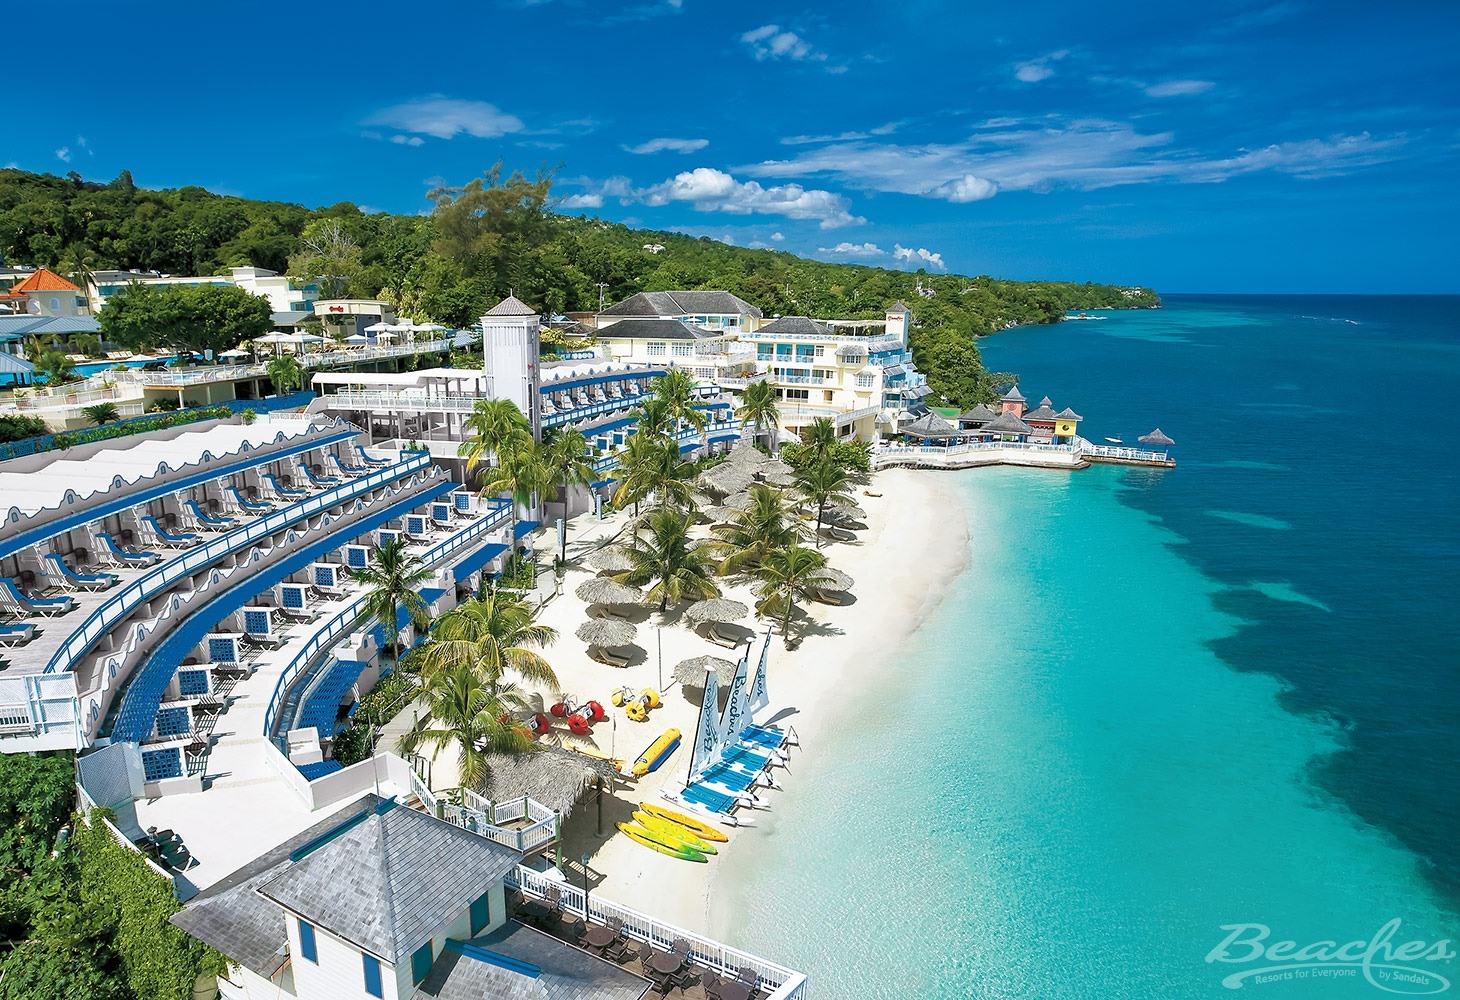 Beaches Ocho Rios Jamaica Luxury All Inclusive Low Cost Deals